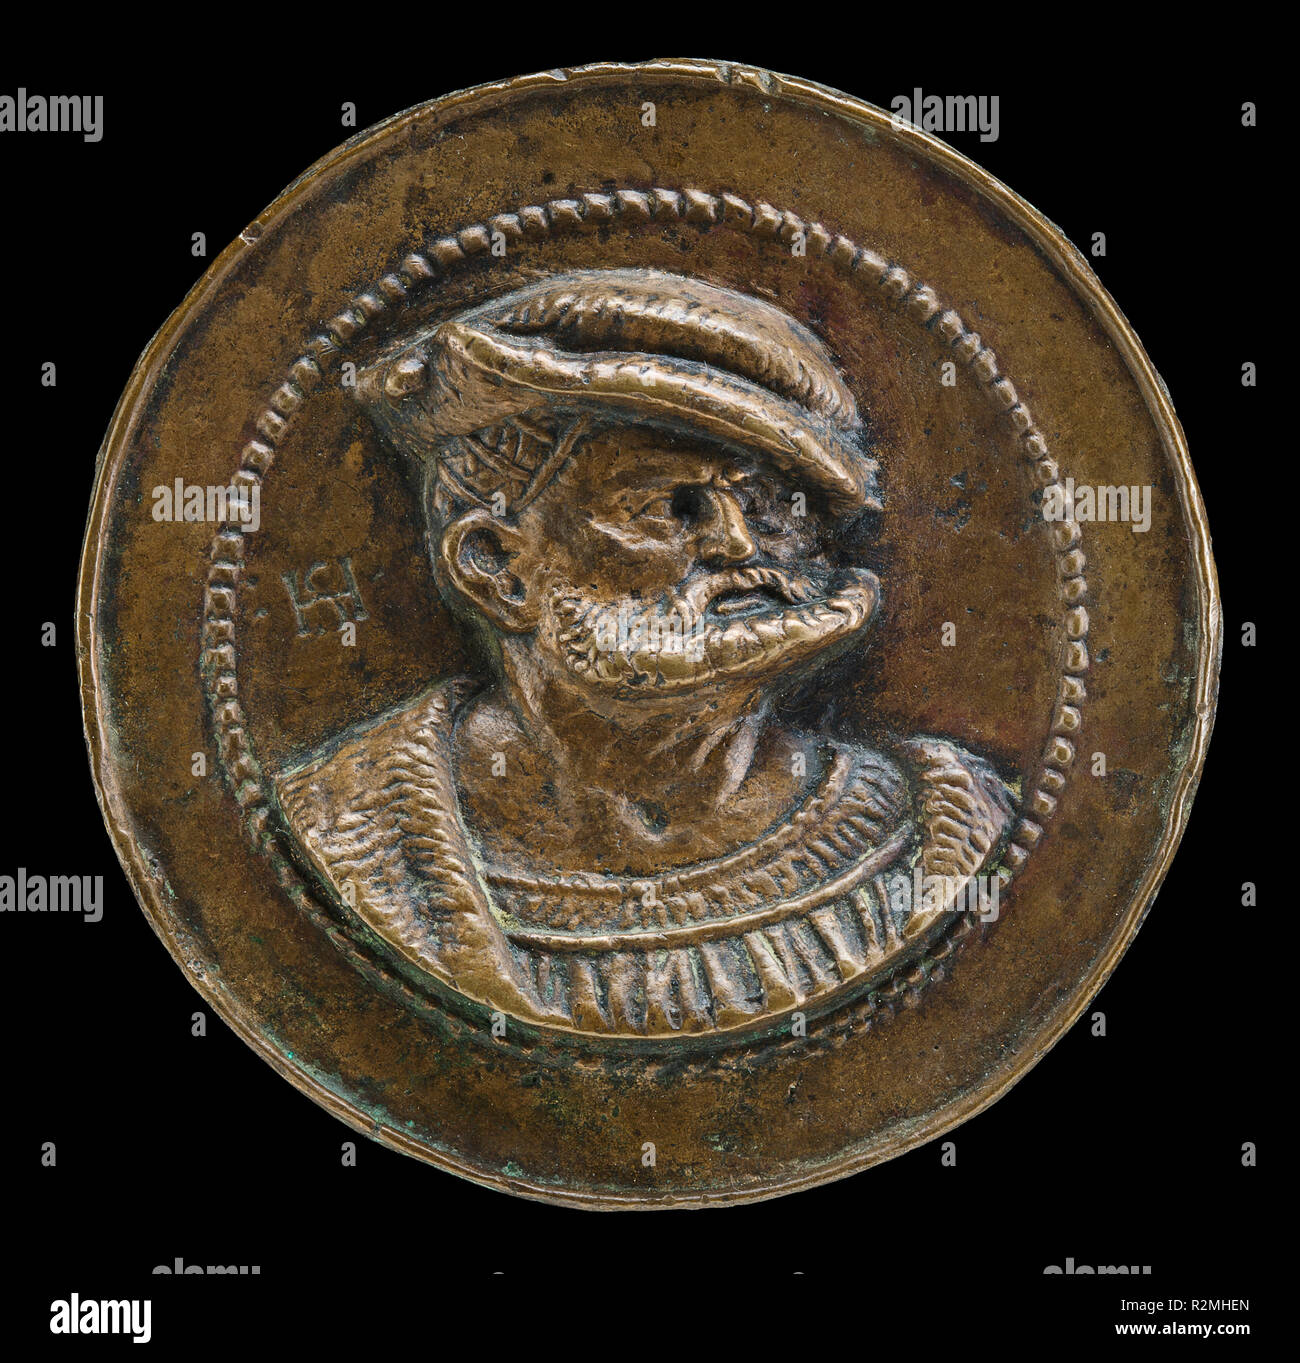 Kunz von der Rosen, died 1519, Confidential Counselor of Maximilian I of  Austria. Dimensions: overall (diameter): 6.43 cm (2 9/16 in.) gross weight:  93.64 gr (0.206 lb.). Medium: bronze. Museum: National Gallery